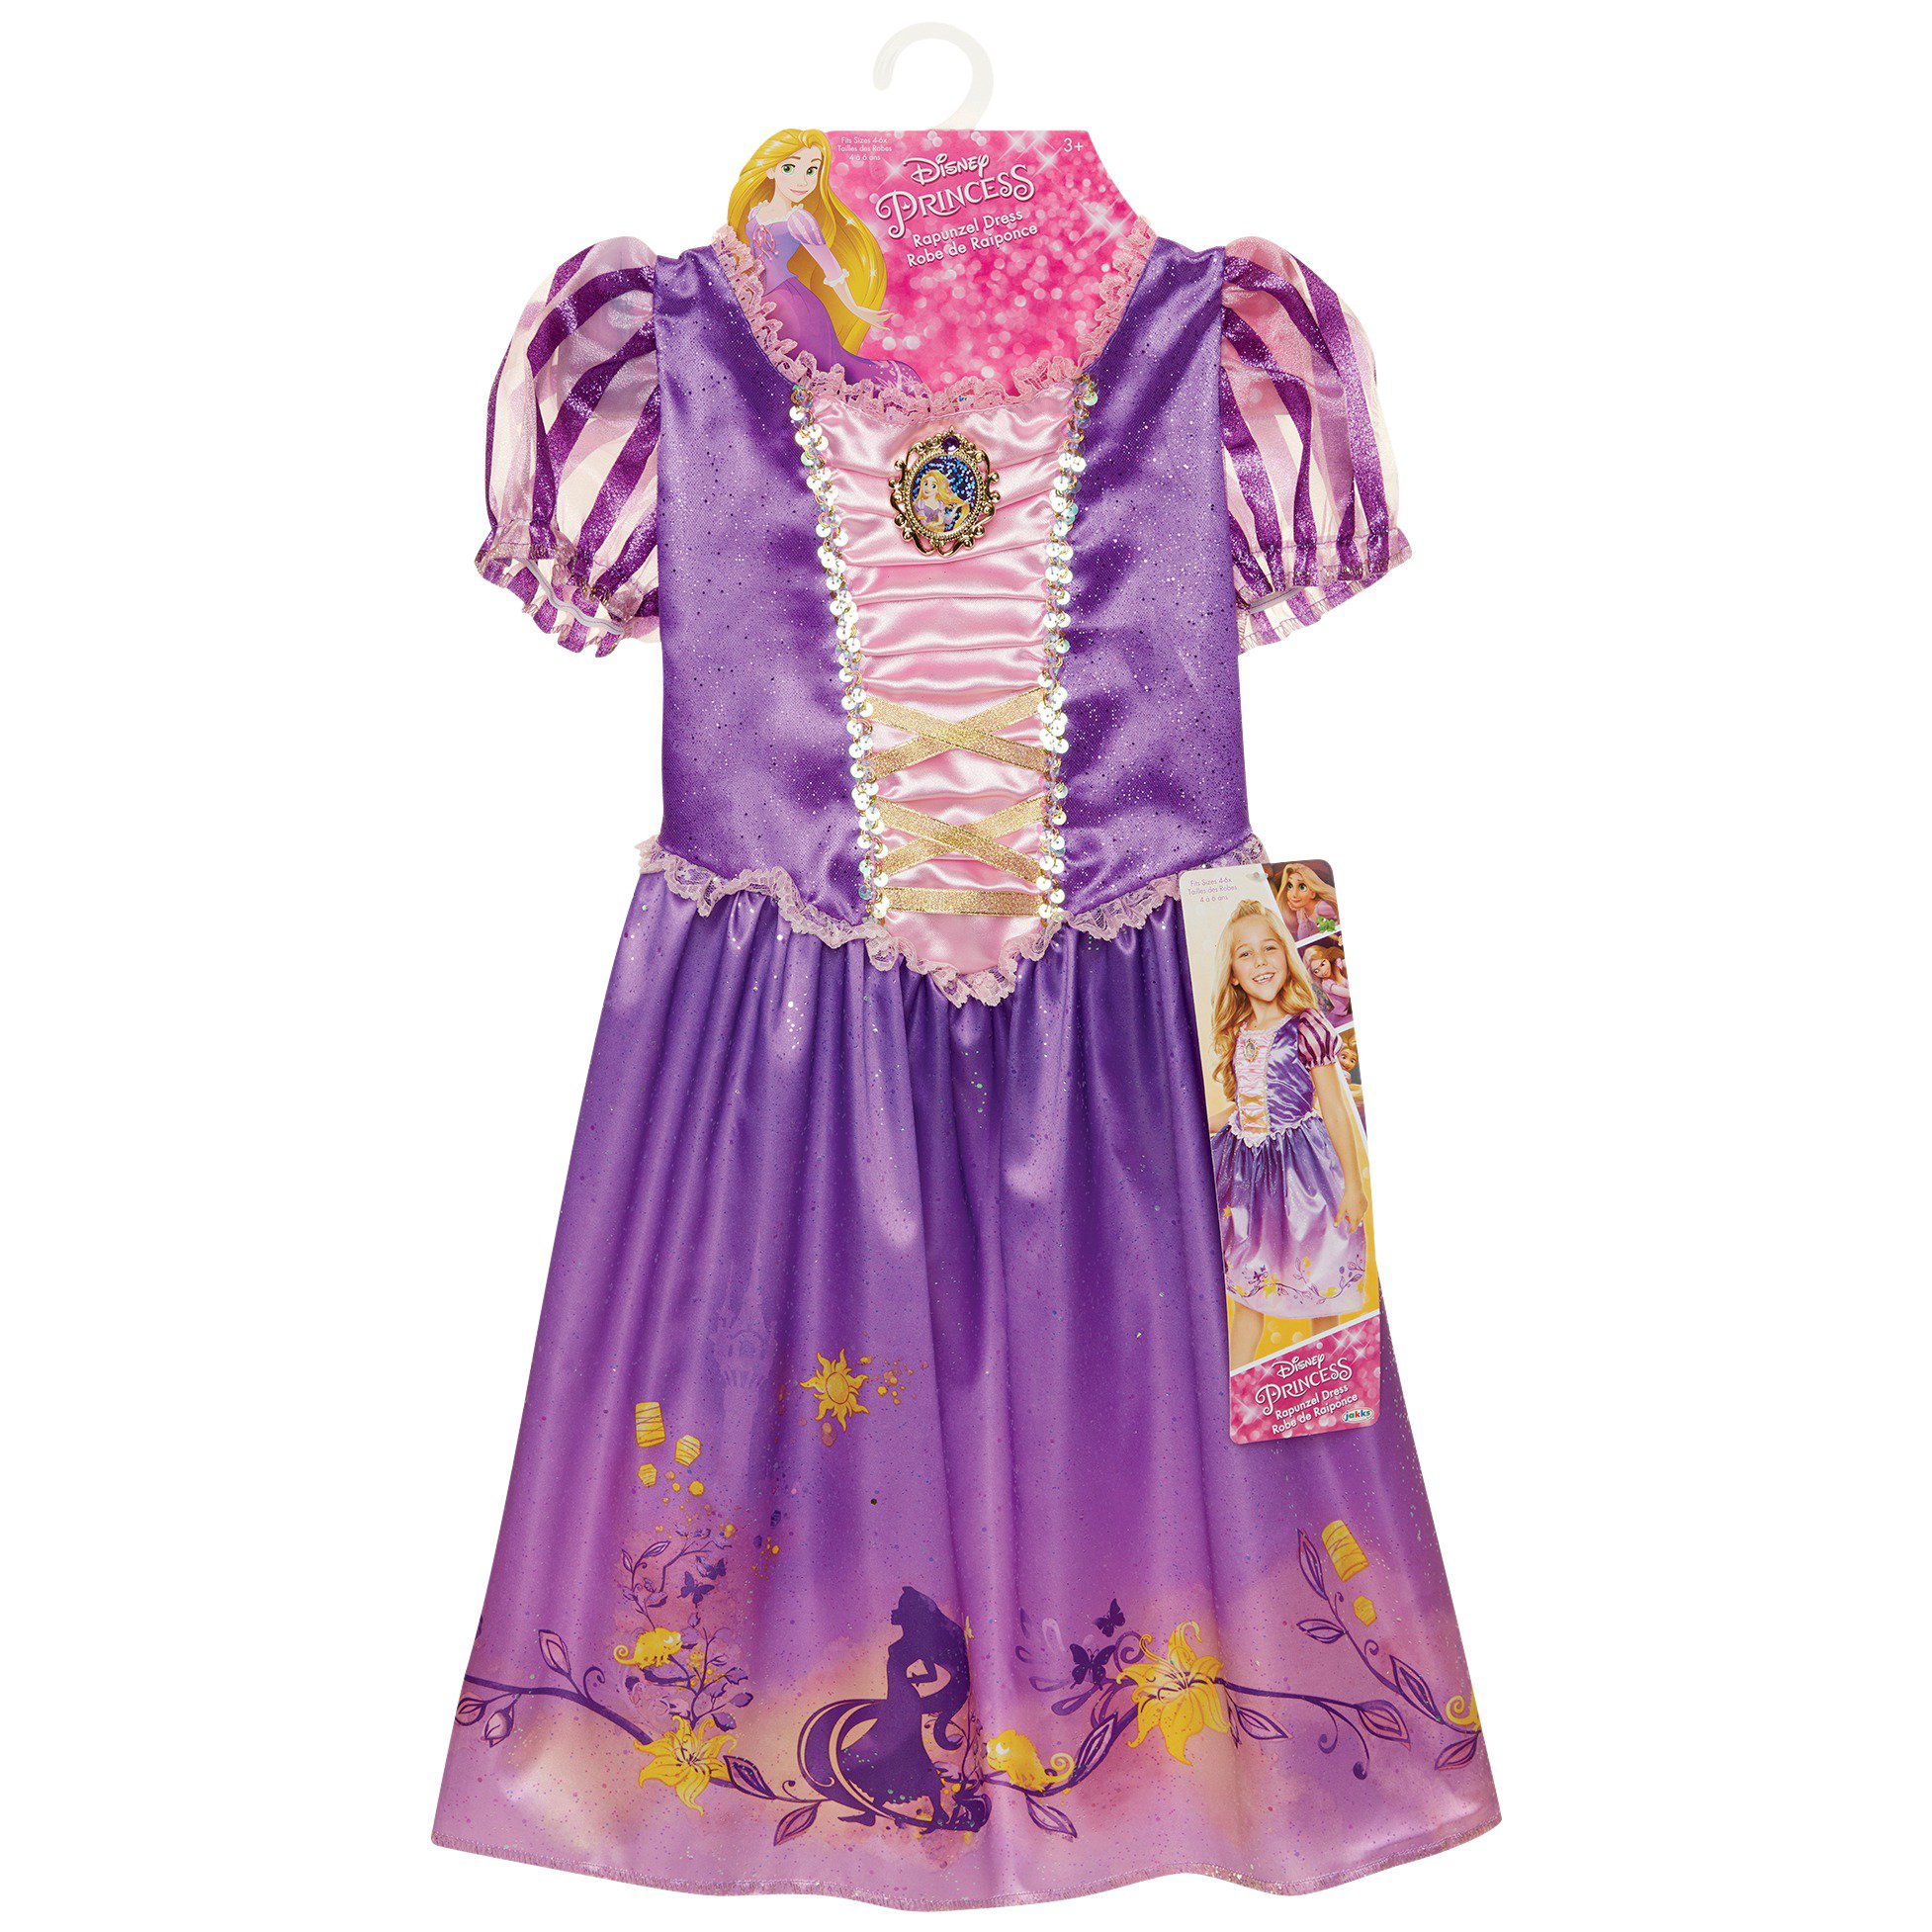 Jakks Disney Princess Dress Assortment Shop Dress Up Pretend Play At H E B